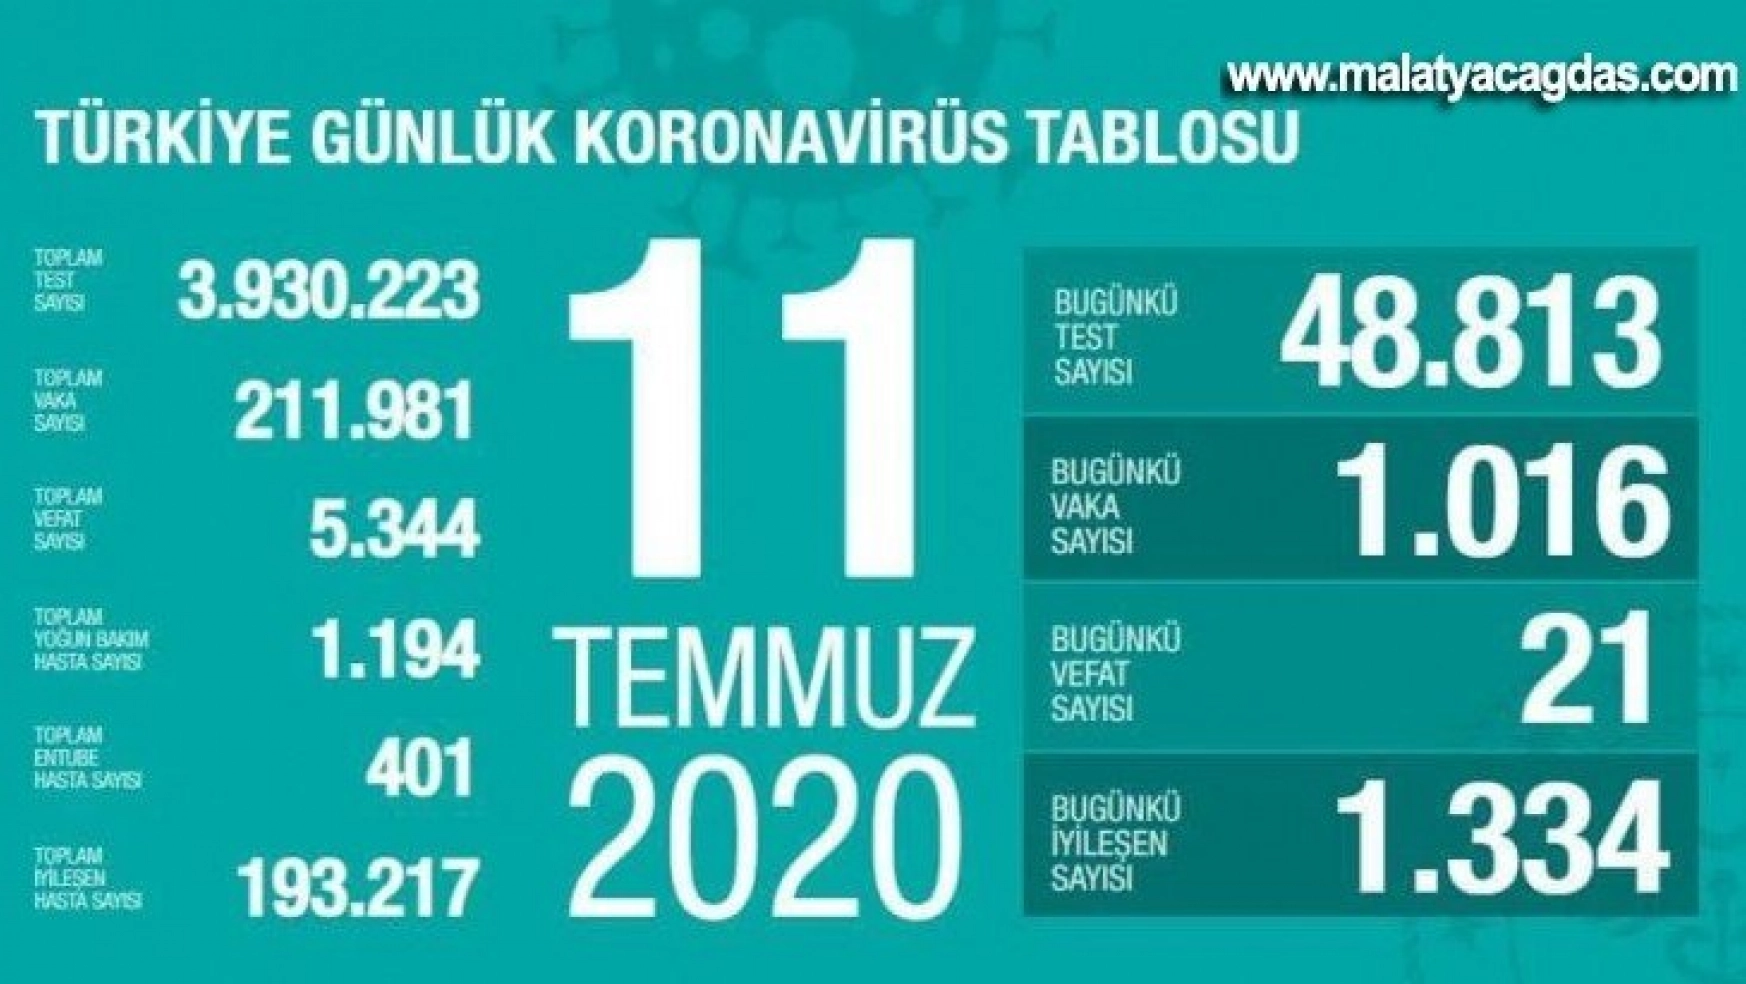 Son 24 saatte korona virüsten 21 can kaybı, bin 16 yeni vaka